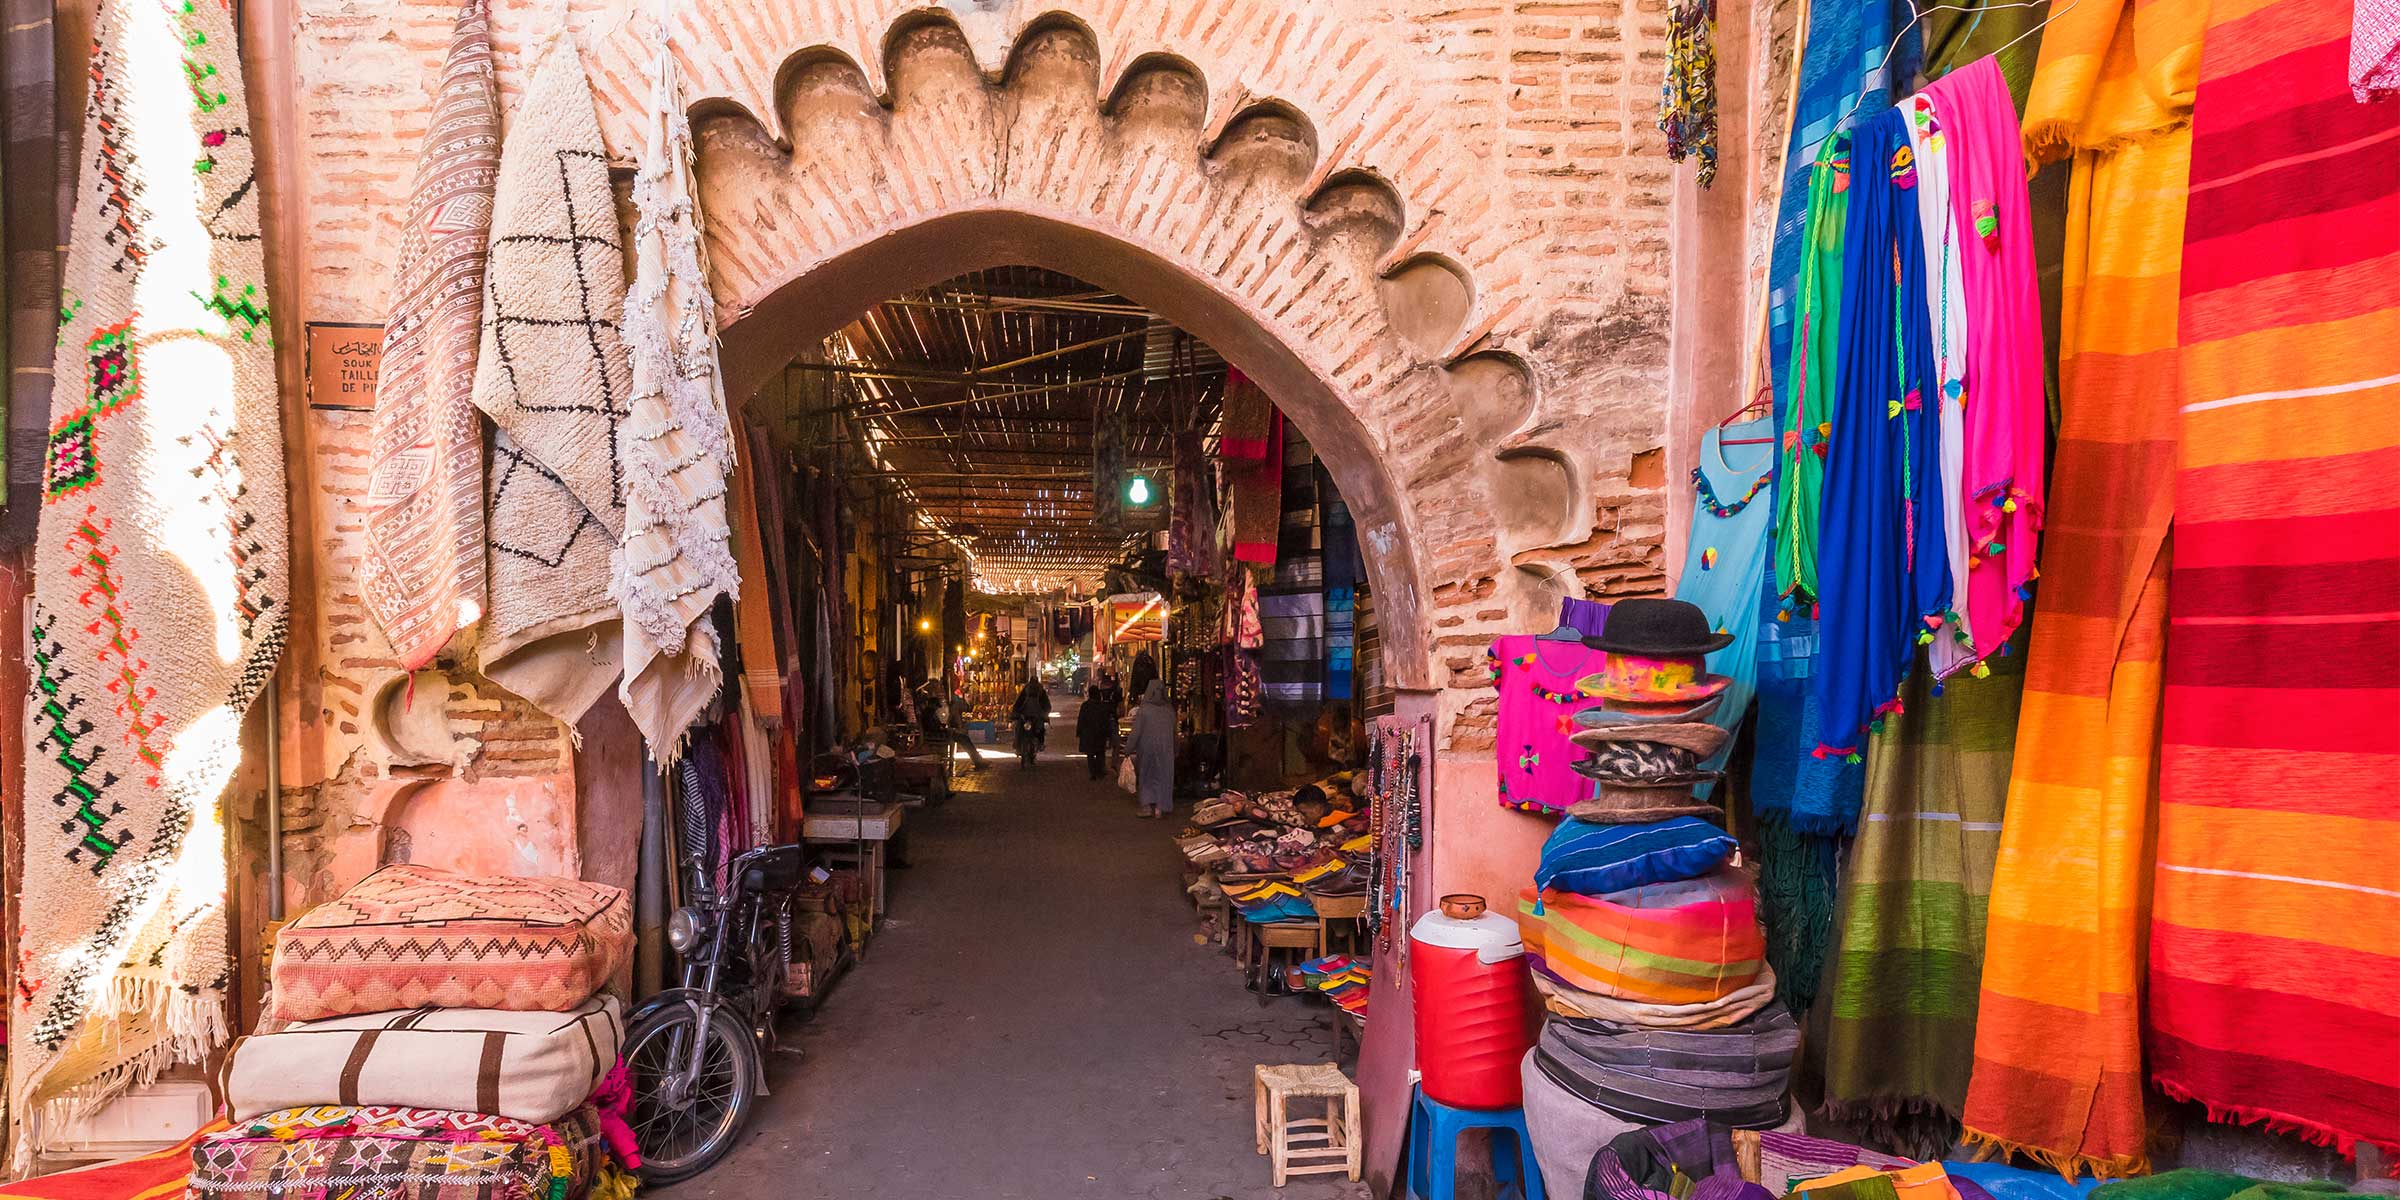 Cruising the Mediterranean and enjoy exploring the Arabic markets in Morocco